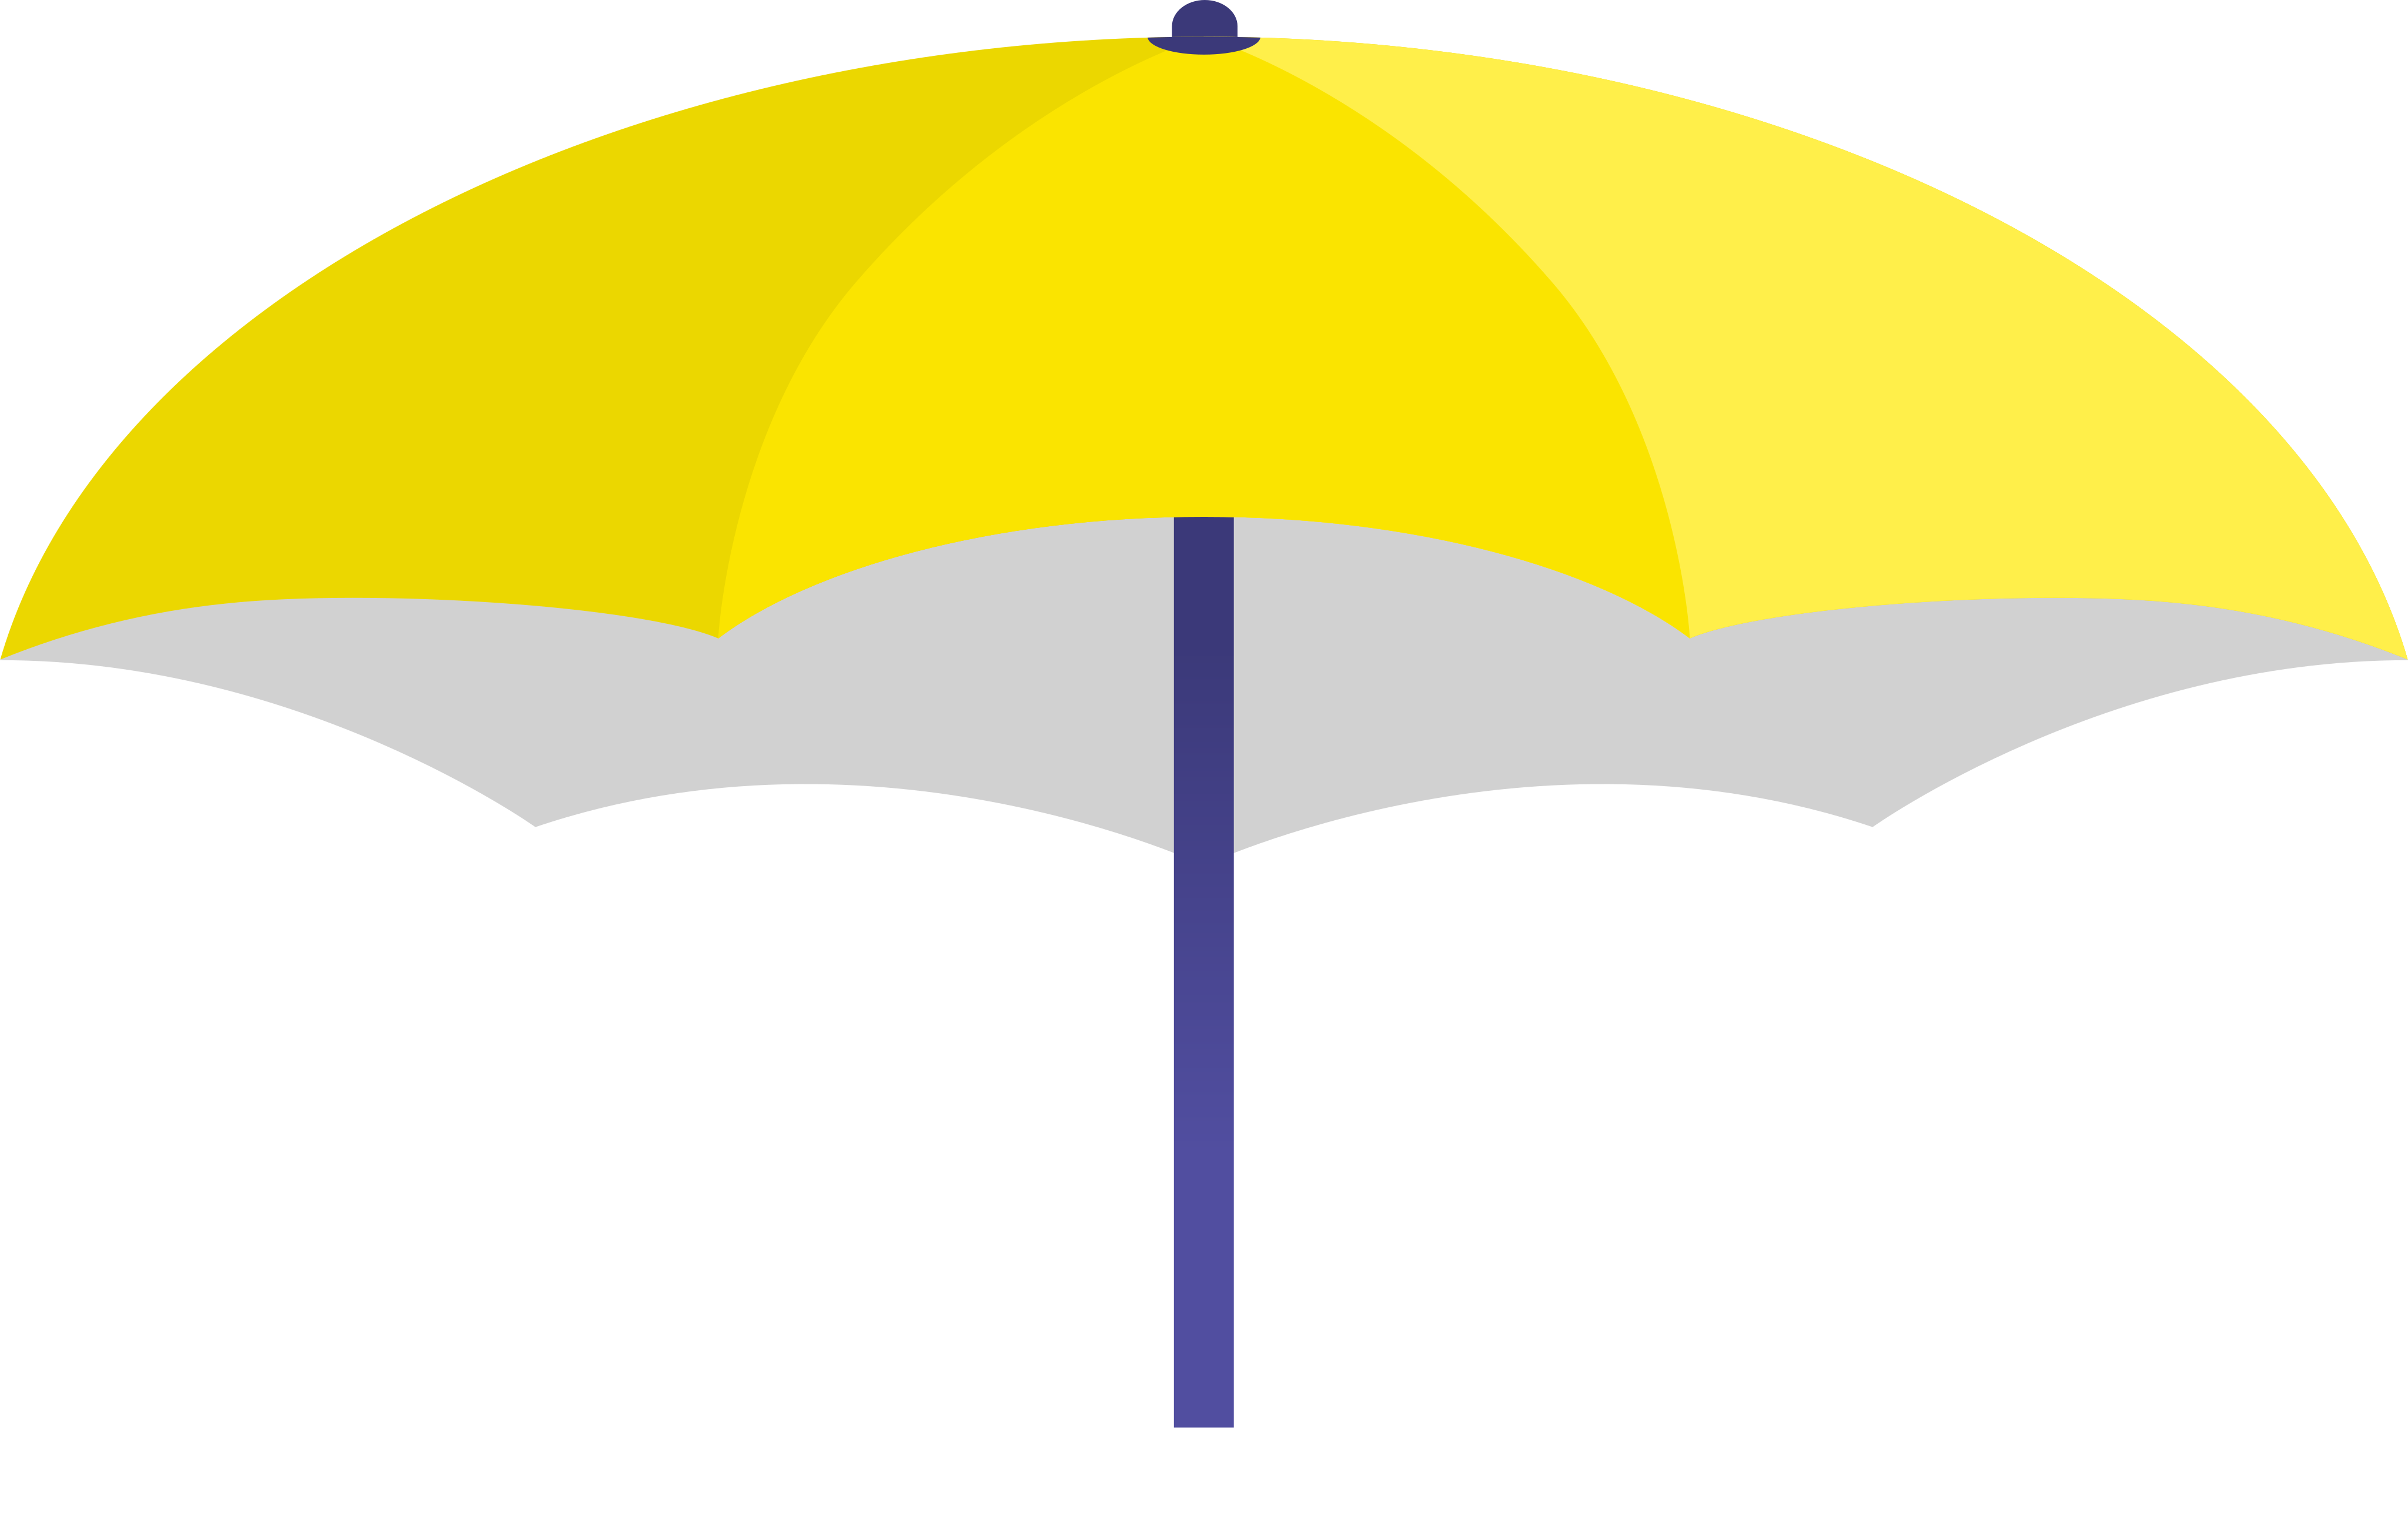 Dementia Umbrella